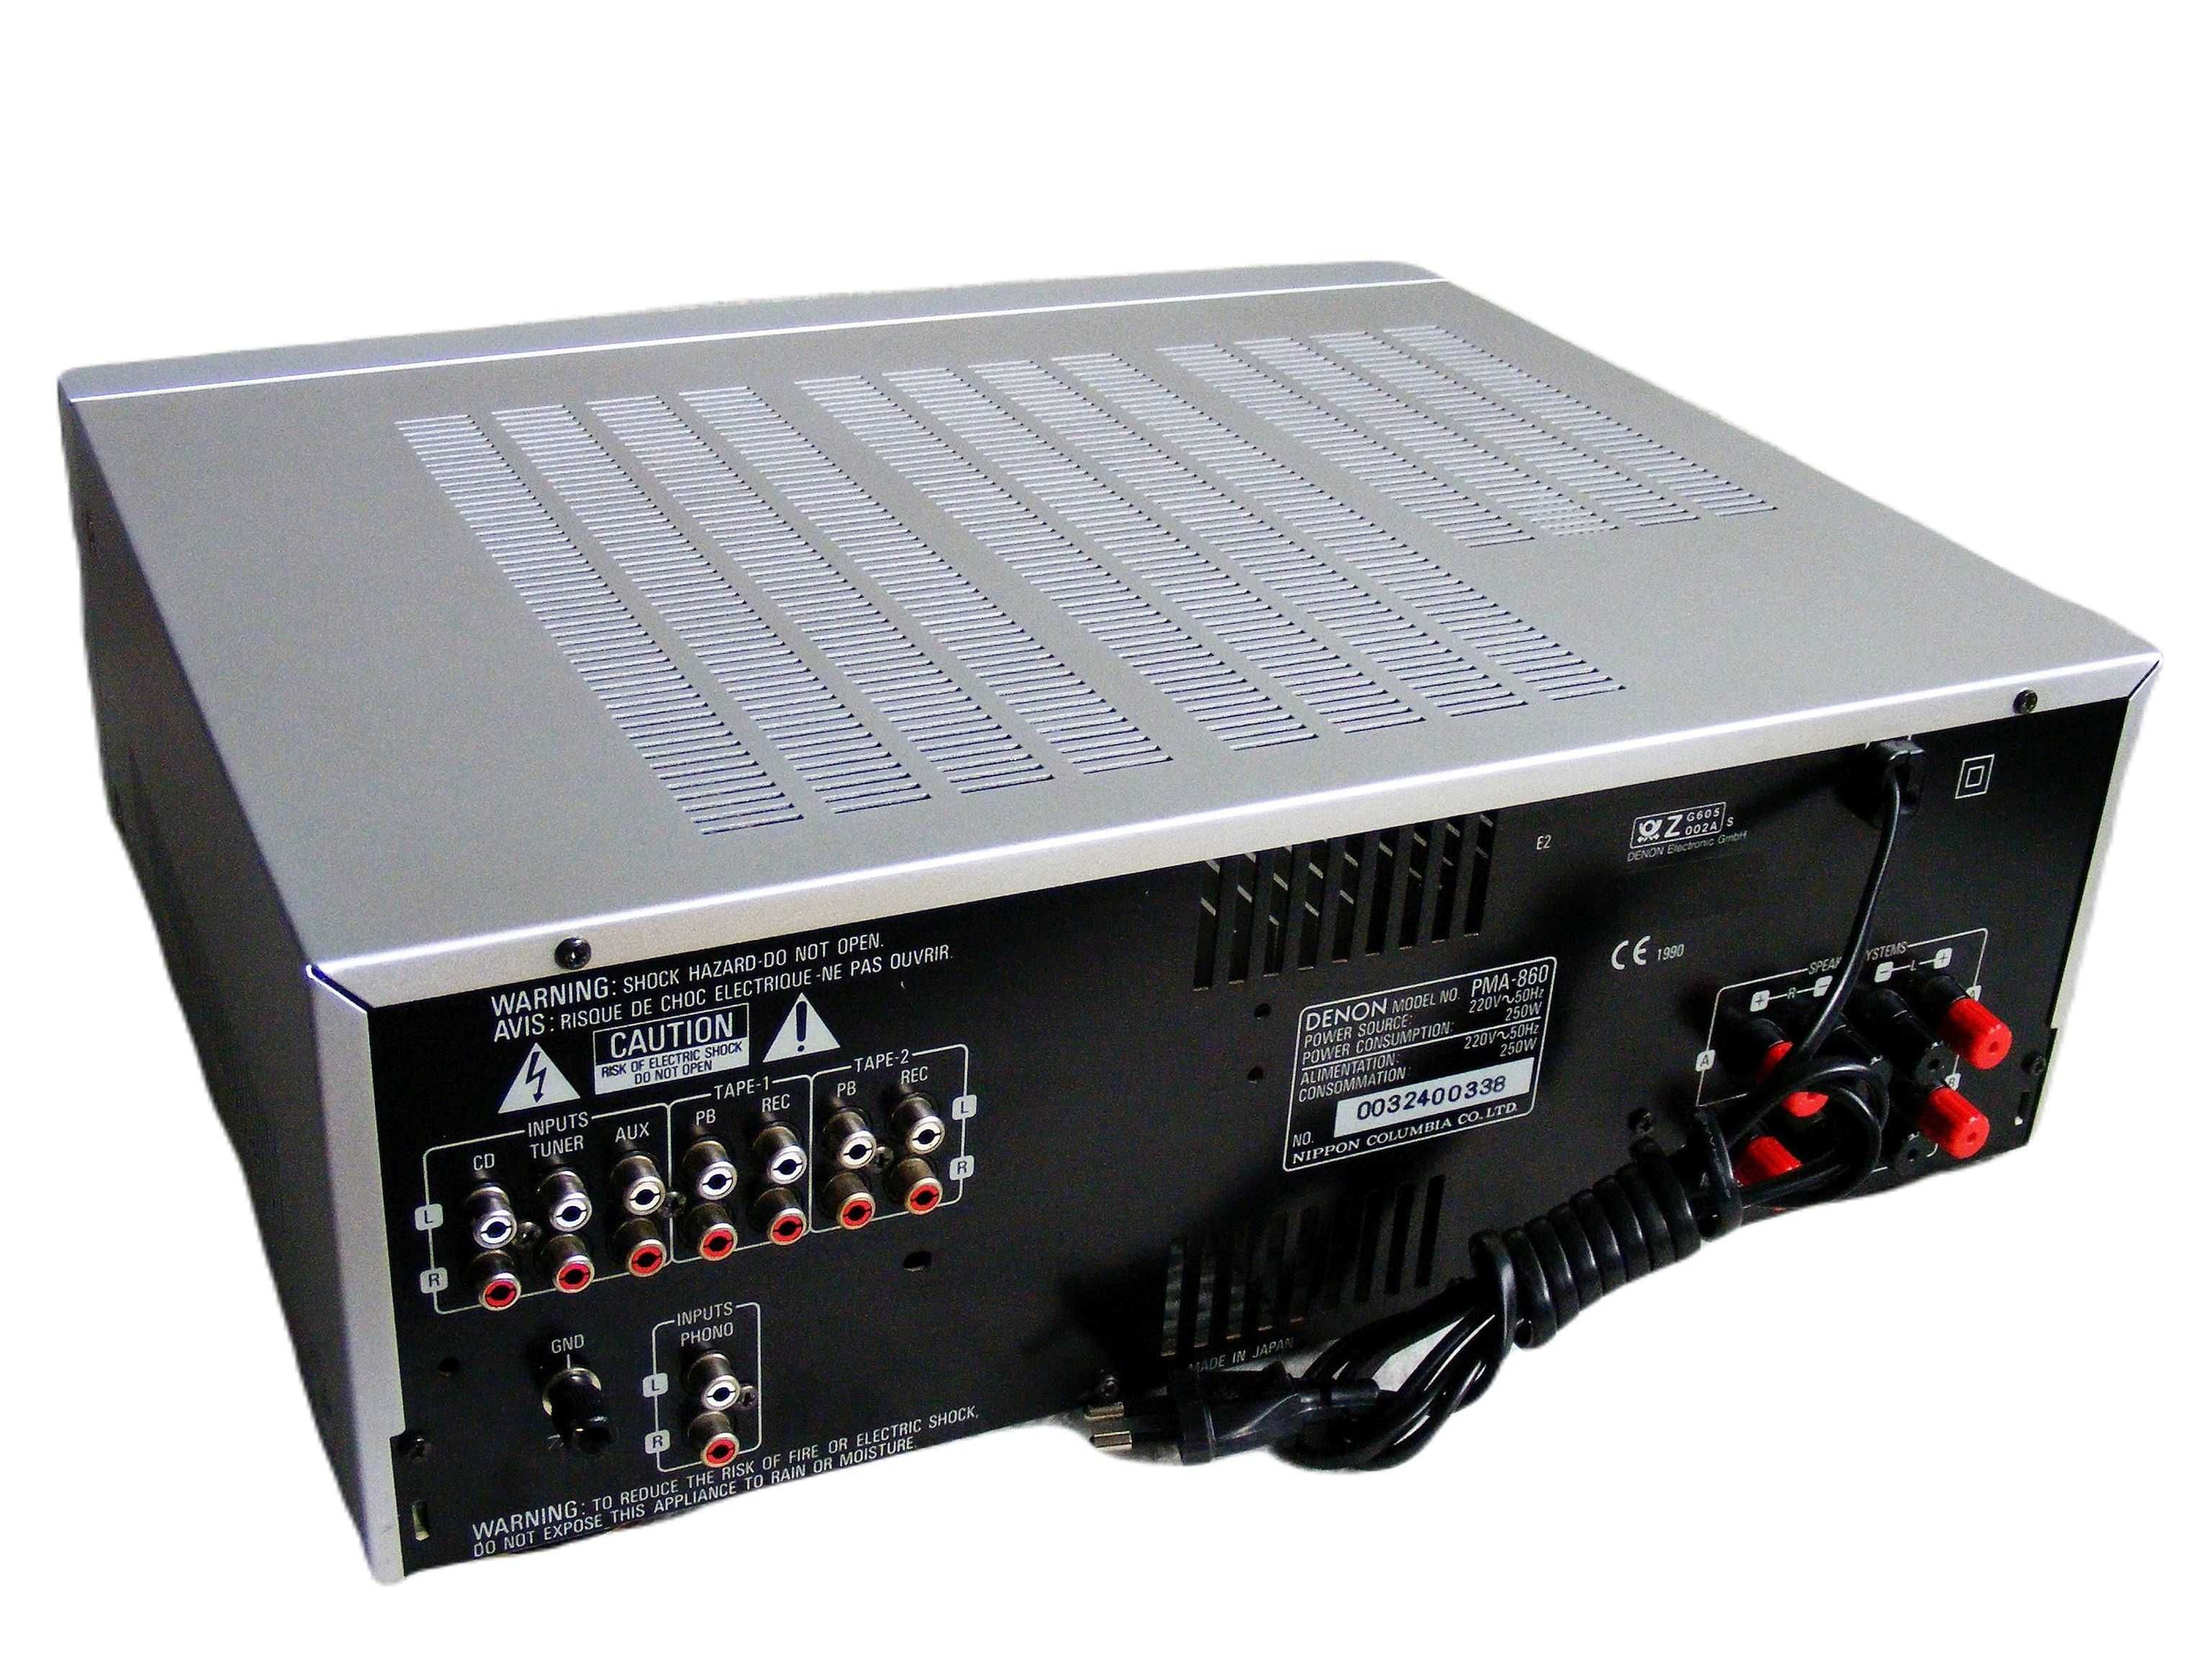 DENON PMA-860 /Audiophile Reference/ HI END 1990r. / Nowy Nieużywany